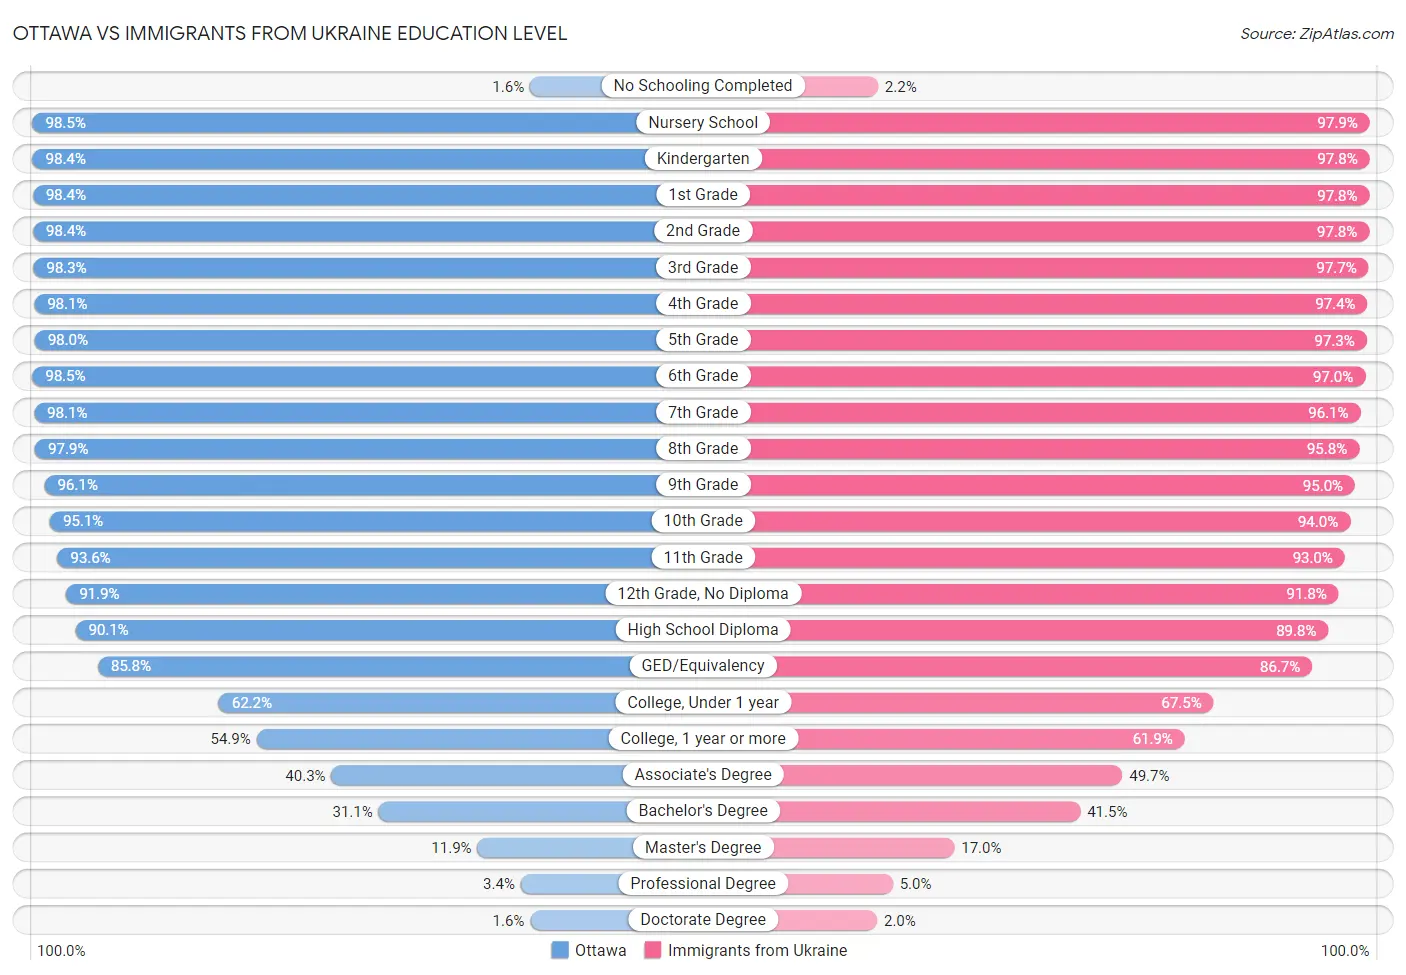 Ottawa vs Immigrants from Ukraine Education Level